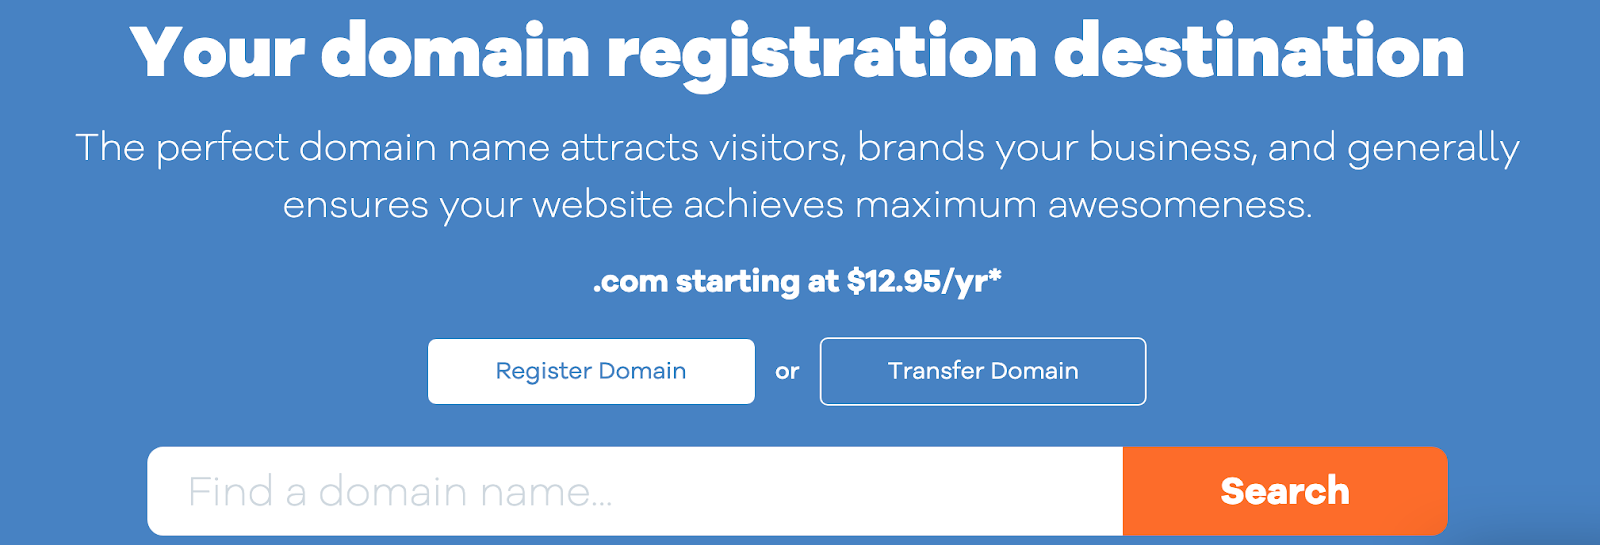 register domain name at hostgator